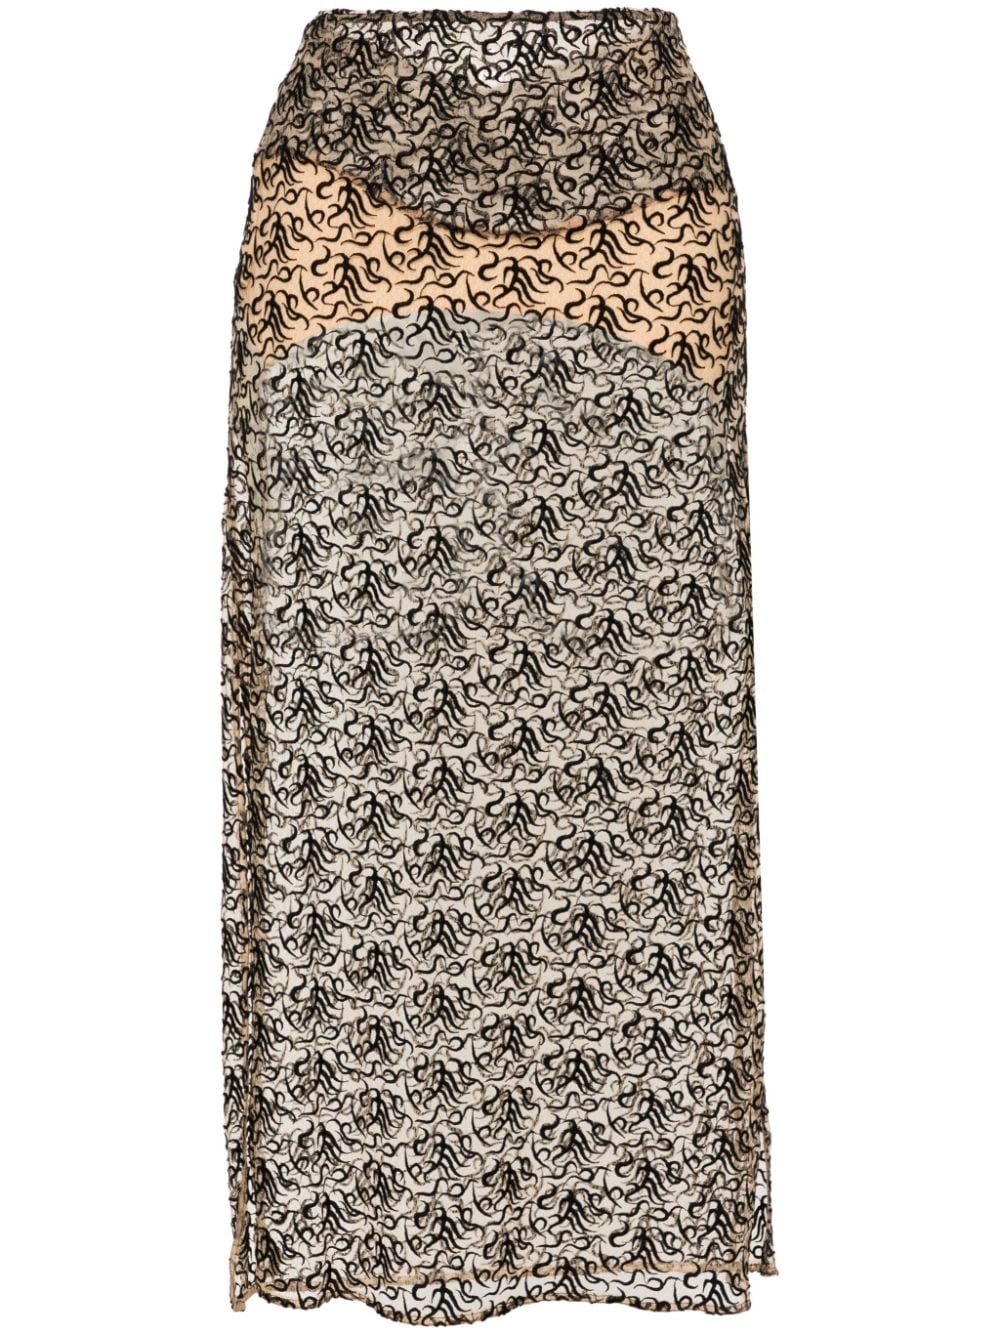 embroidered semi-sheer skirt - 1